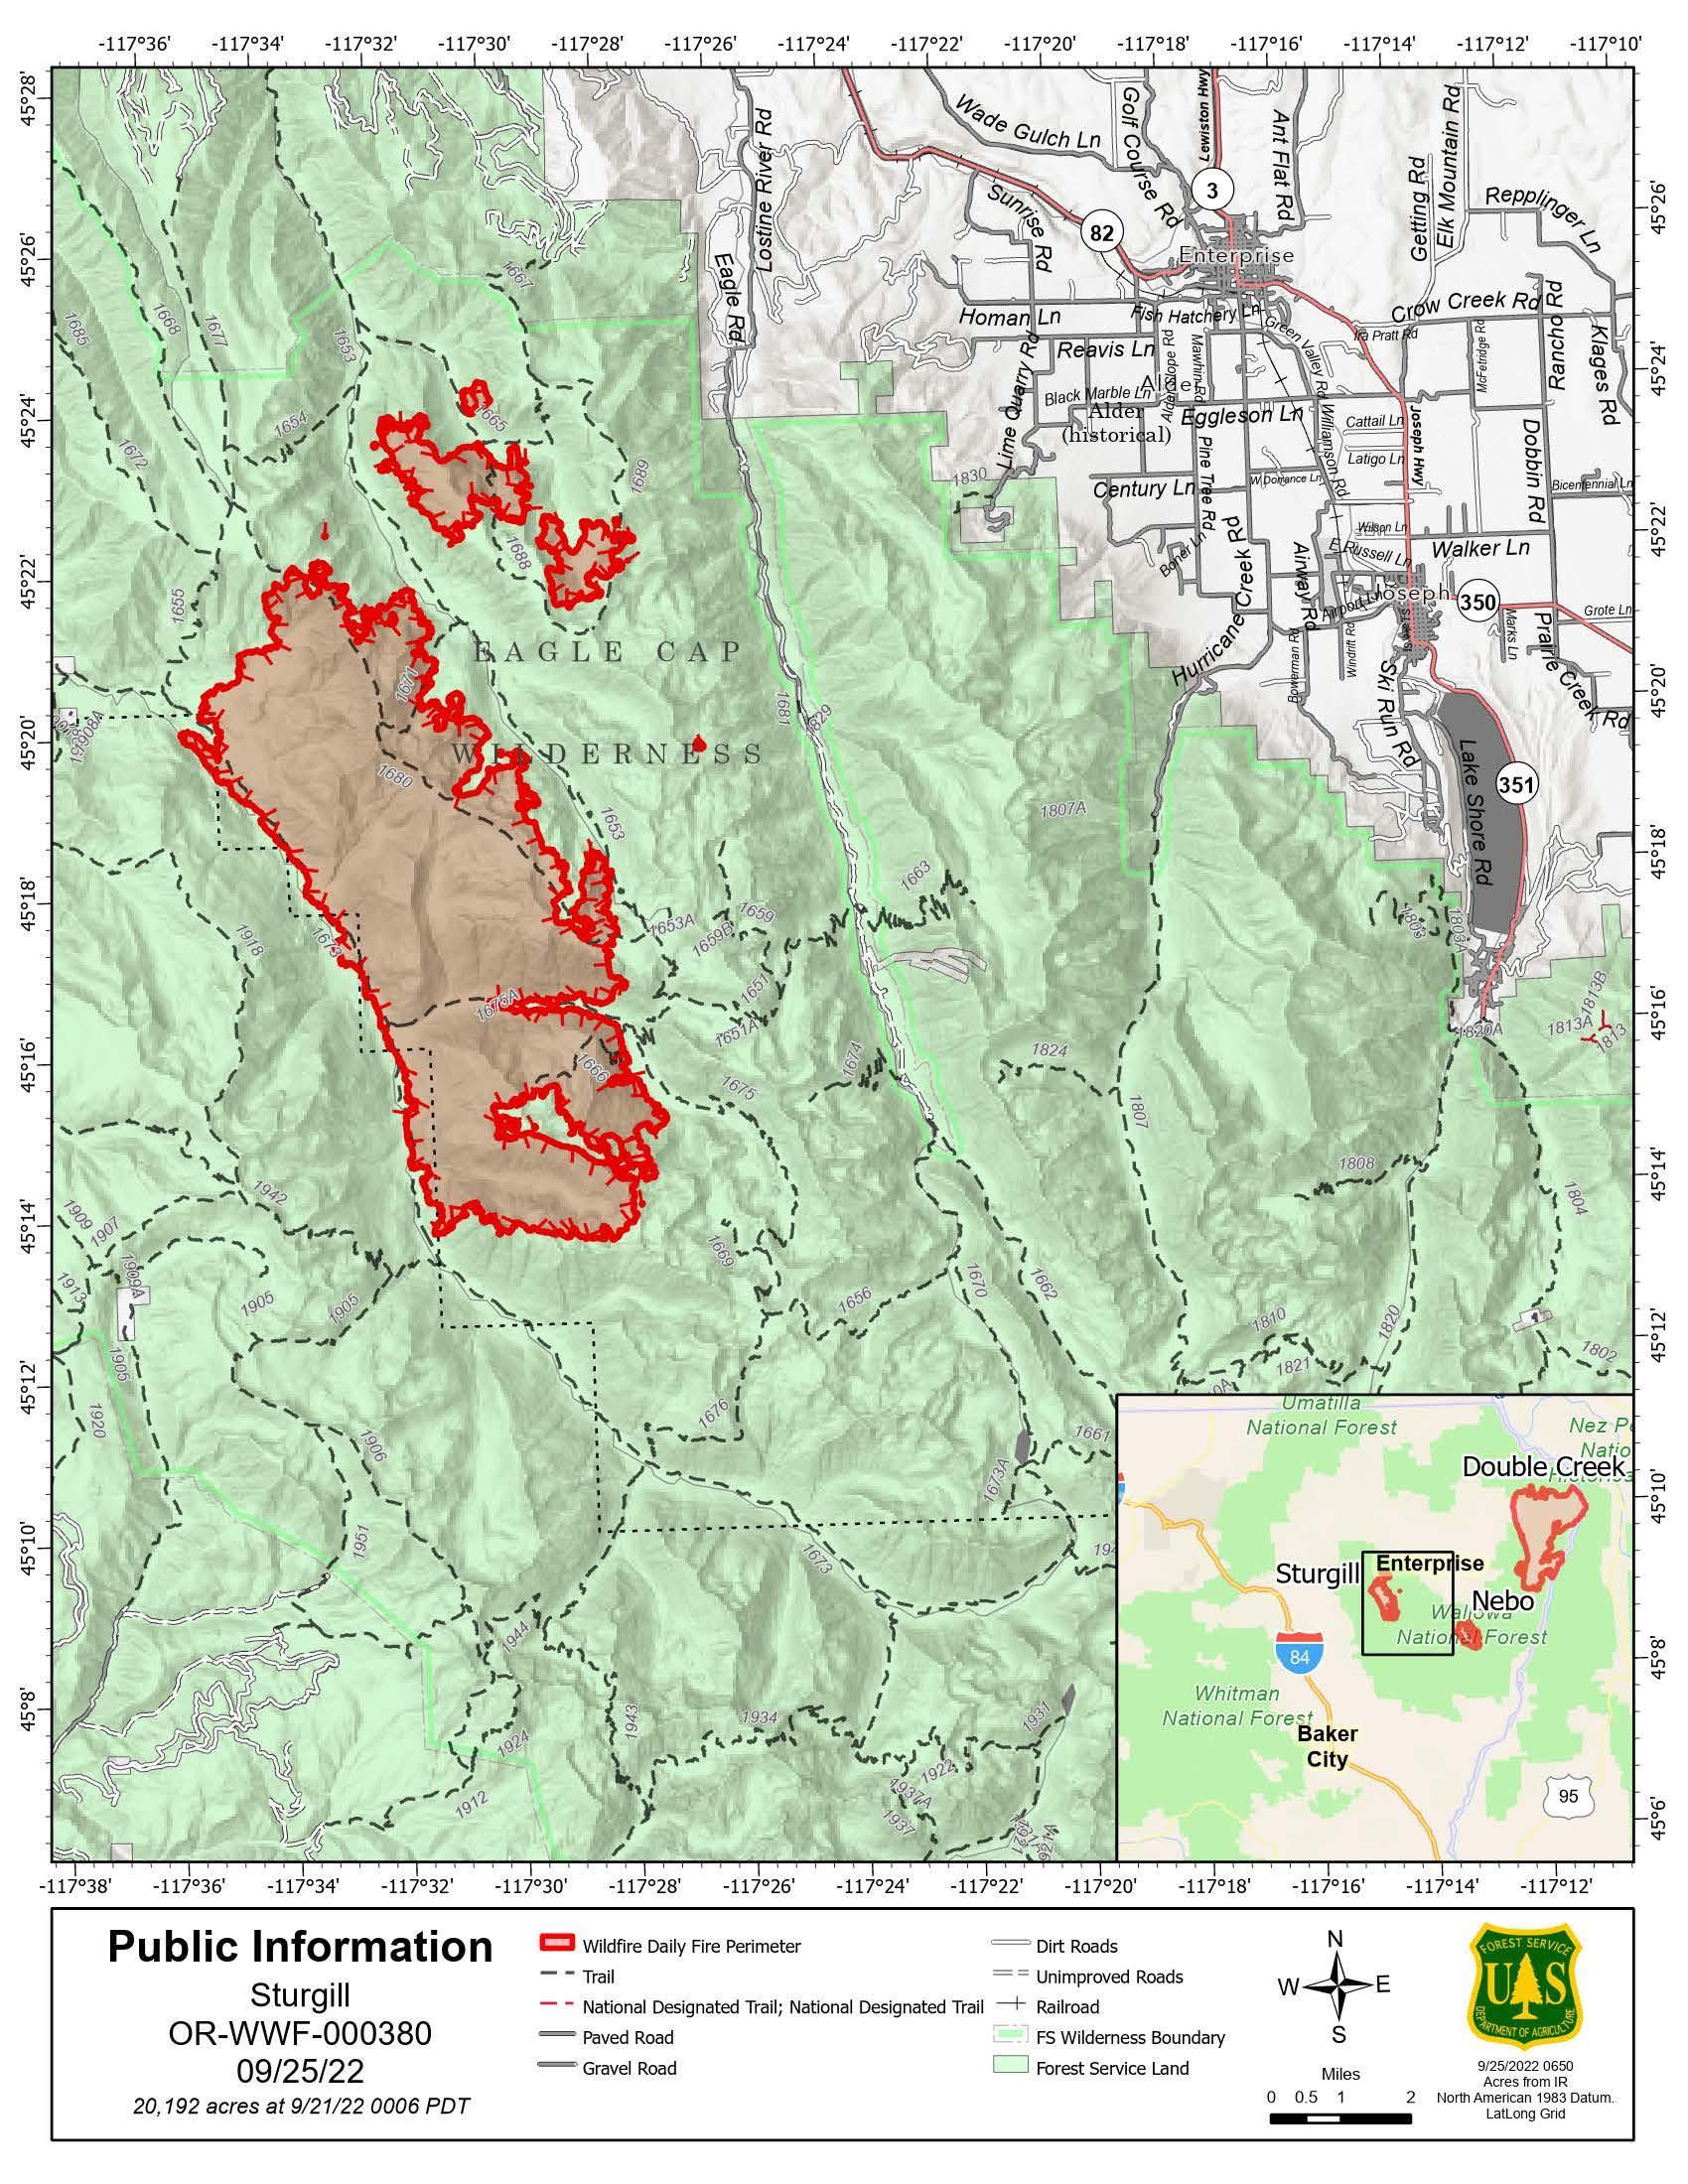 Sturgill Fire Map - 09/26/2022